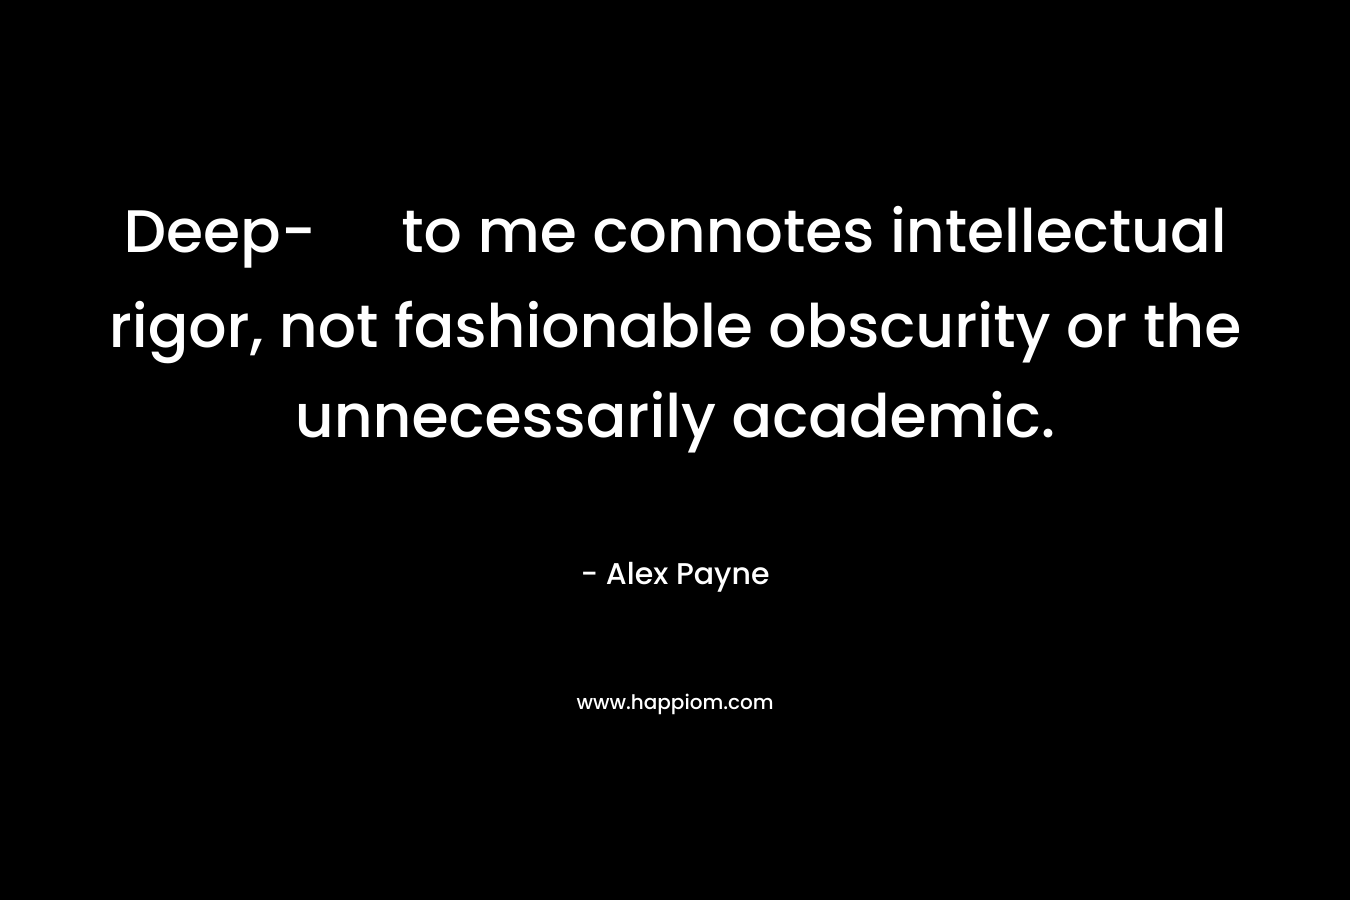 Deep- to me connotes intellectual rigor, not fashionable obscurity or the unnecessarily academic.